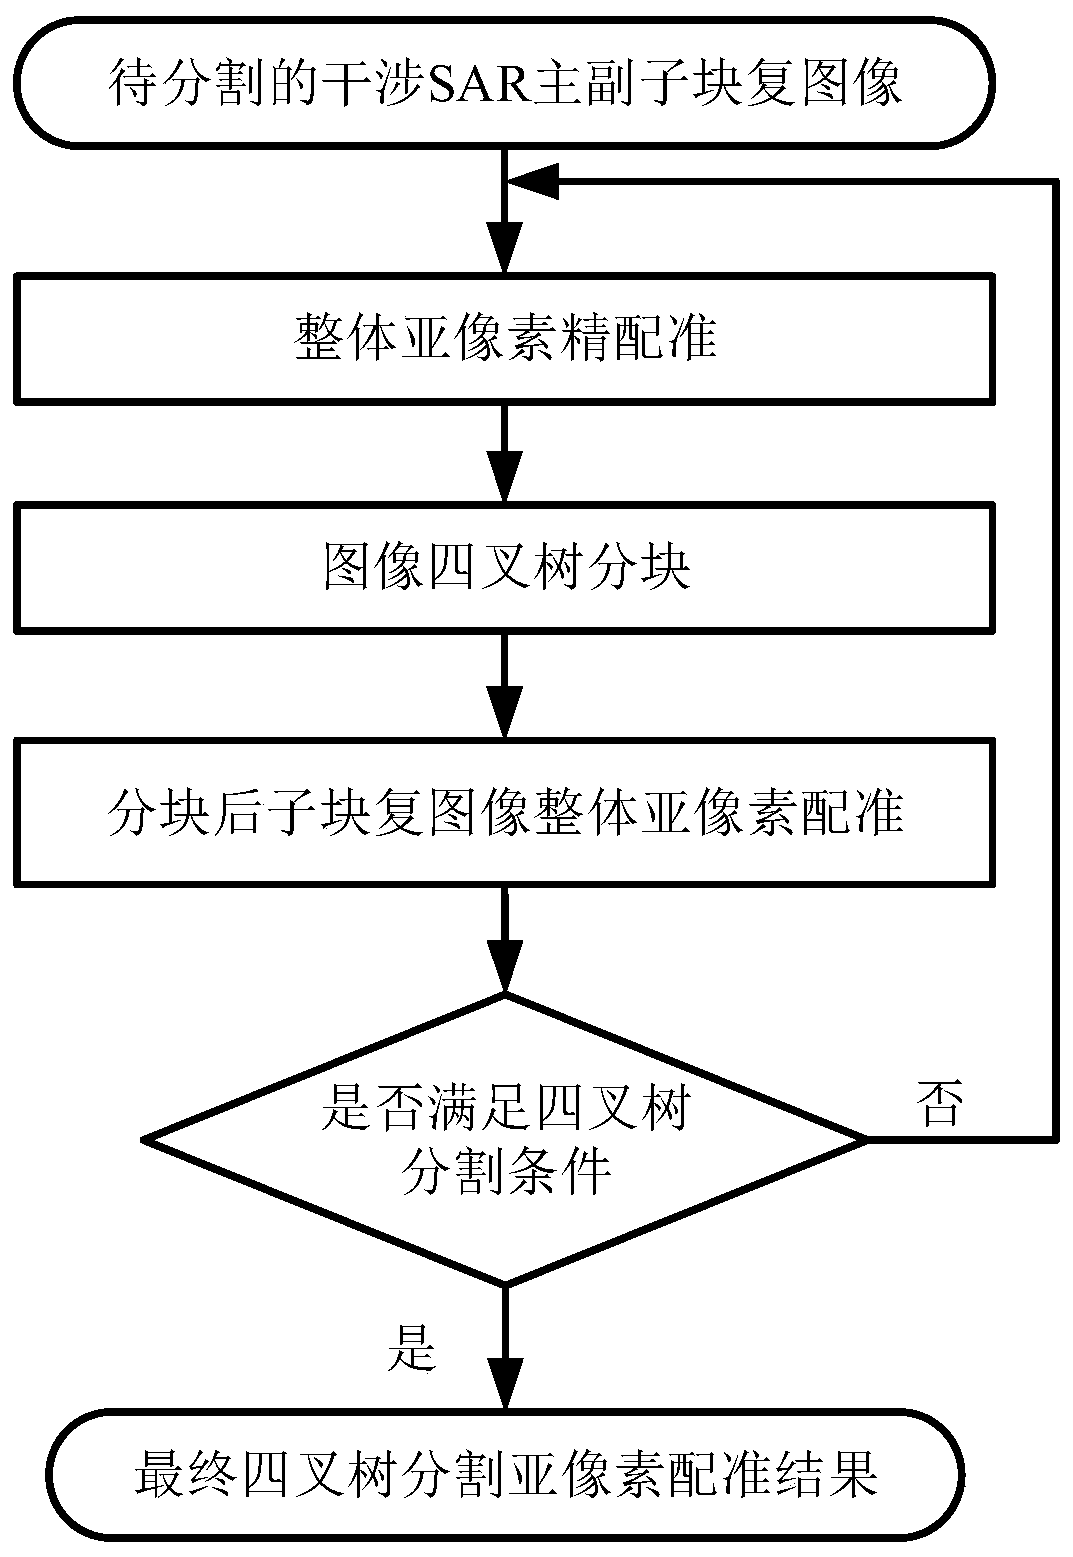 A Fast Image Registration Method of Insar Based on Quadtree Segmentation